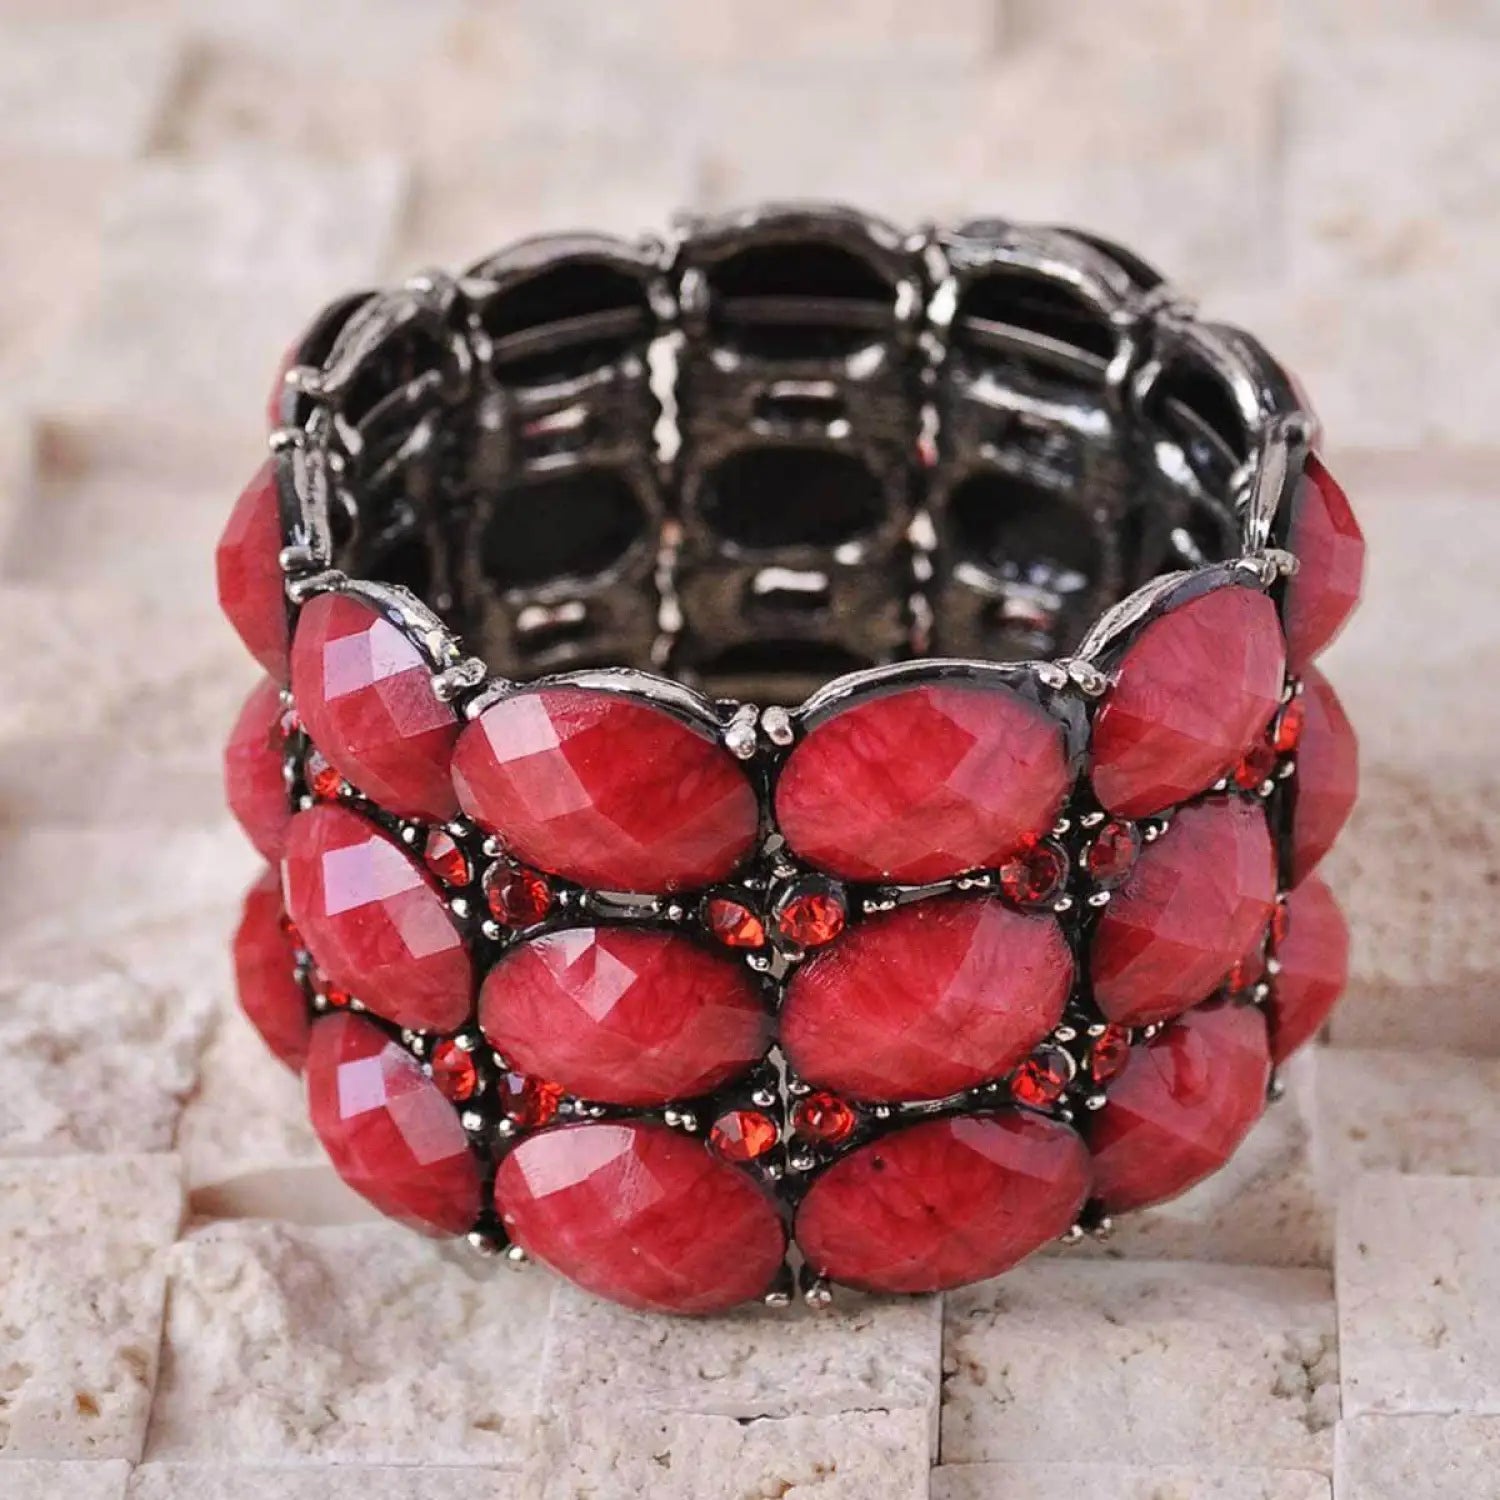 Red crystal stretch bracelet on Chunky Vivid Metal Beads Bangle - Statement Retro Bracelet Jewellery.